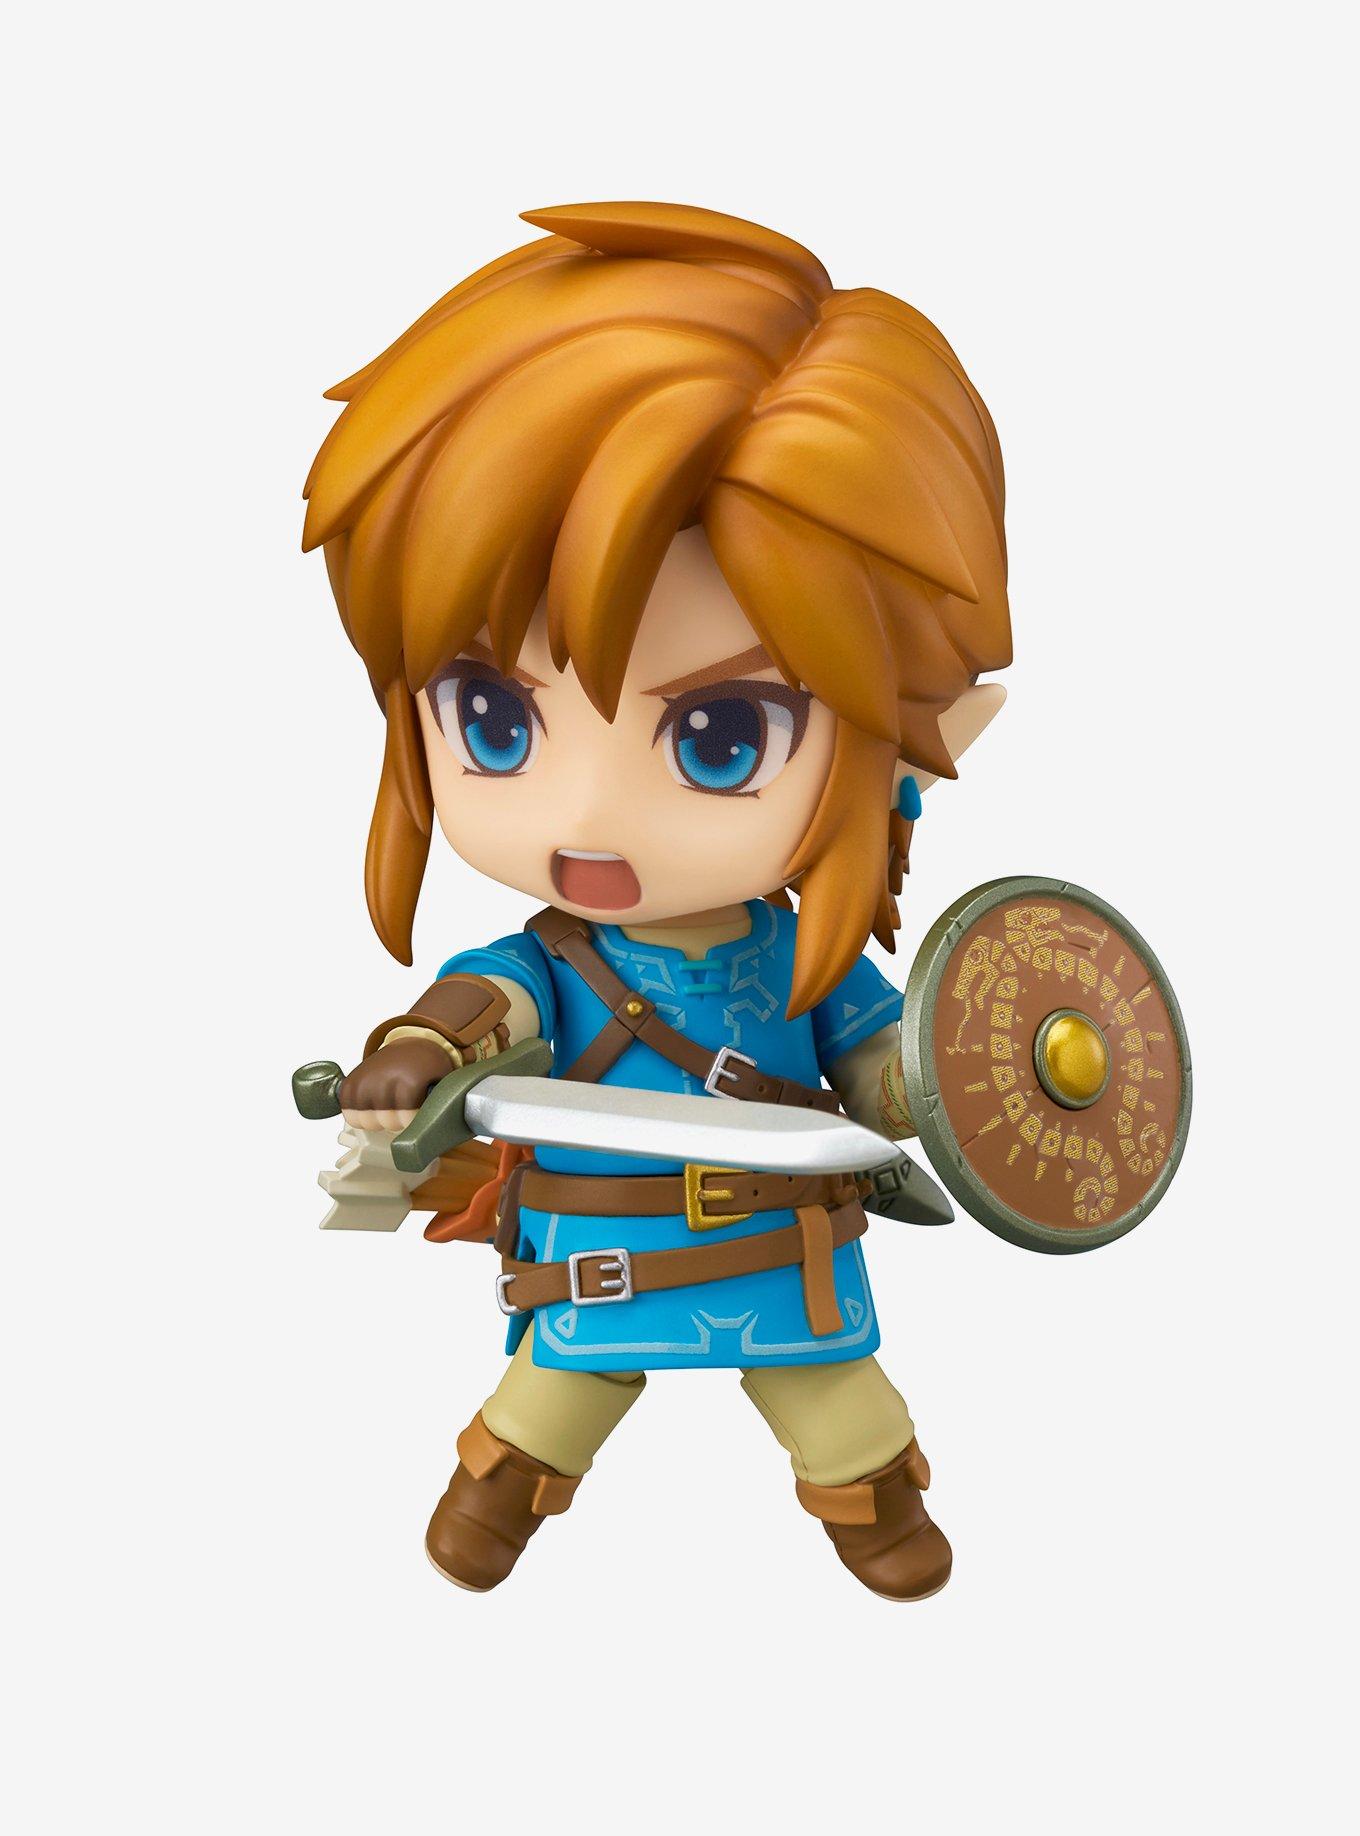 Link - The Legend of Zelda: Breath of the Wild Nendoroid Toy